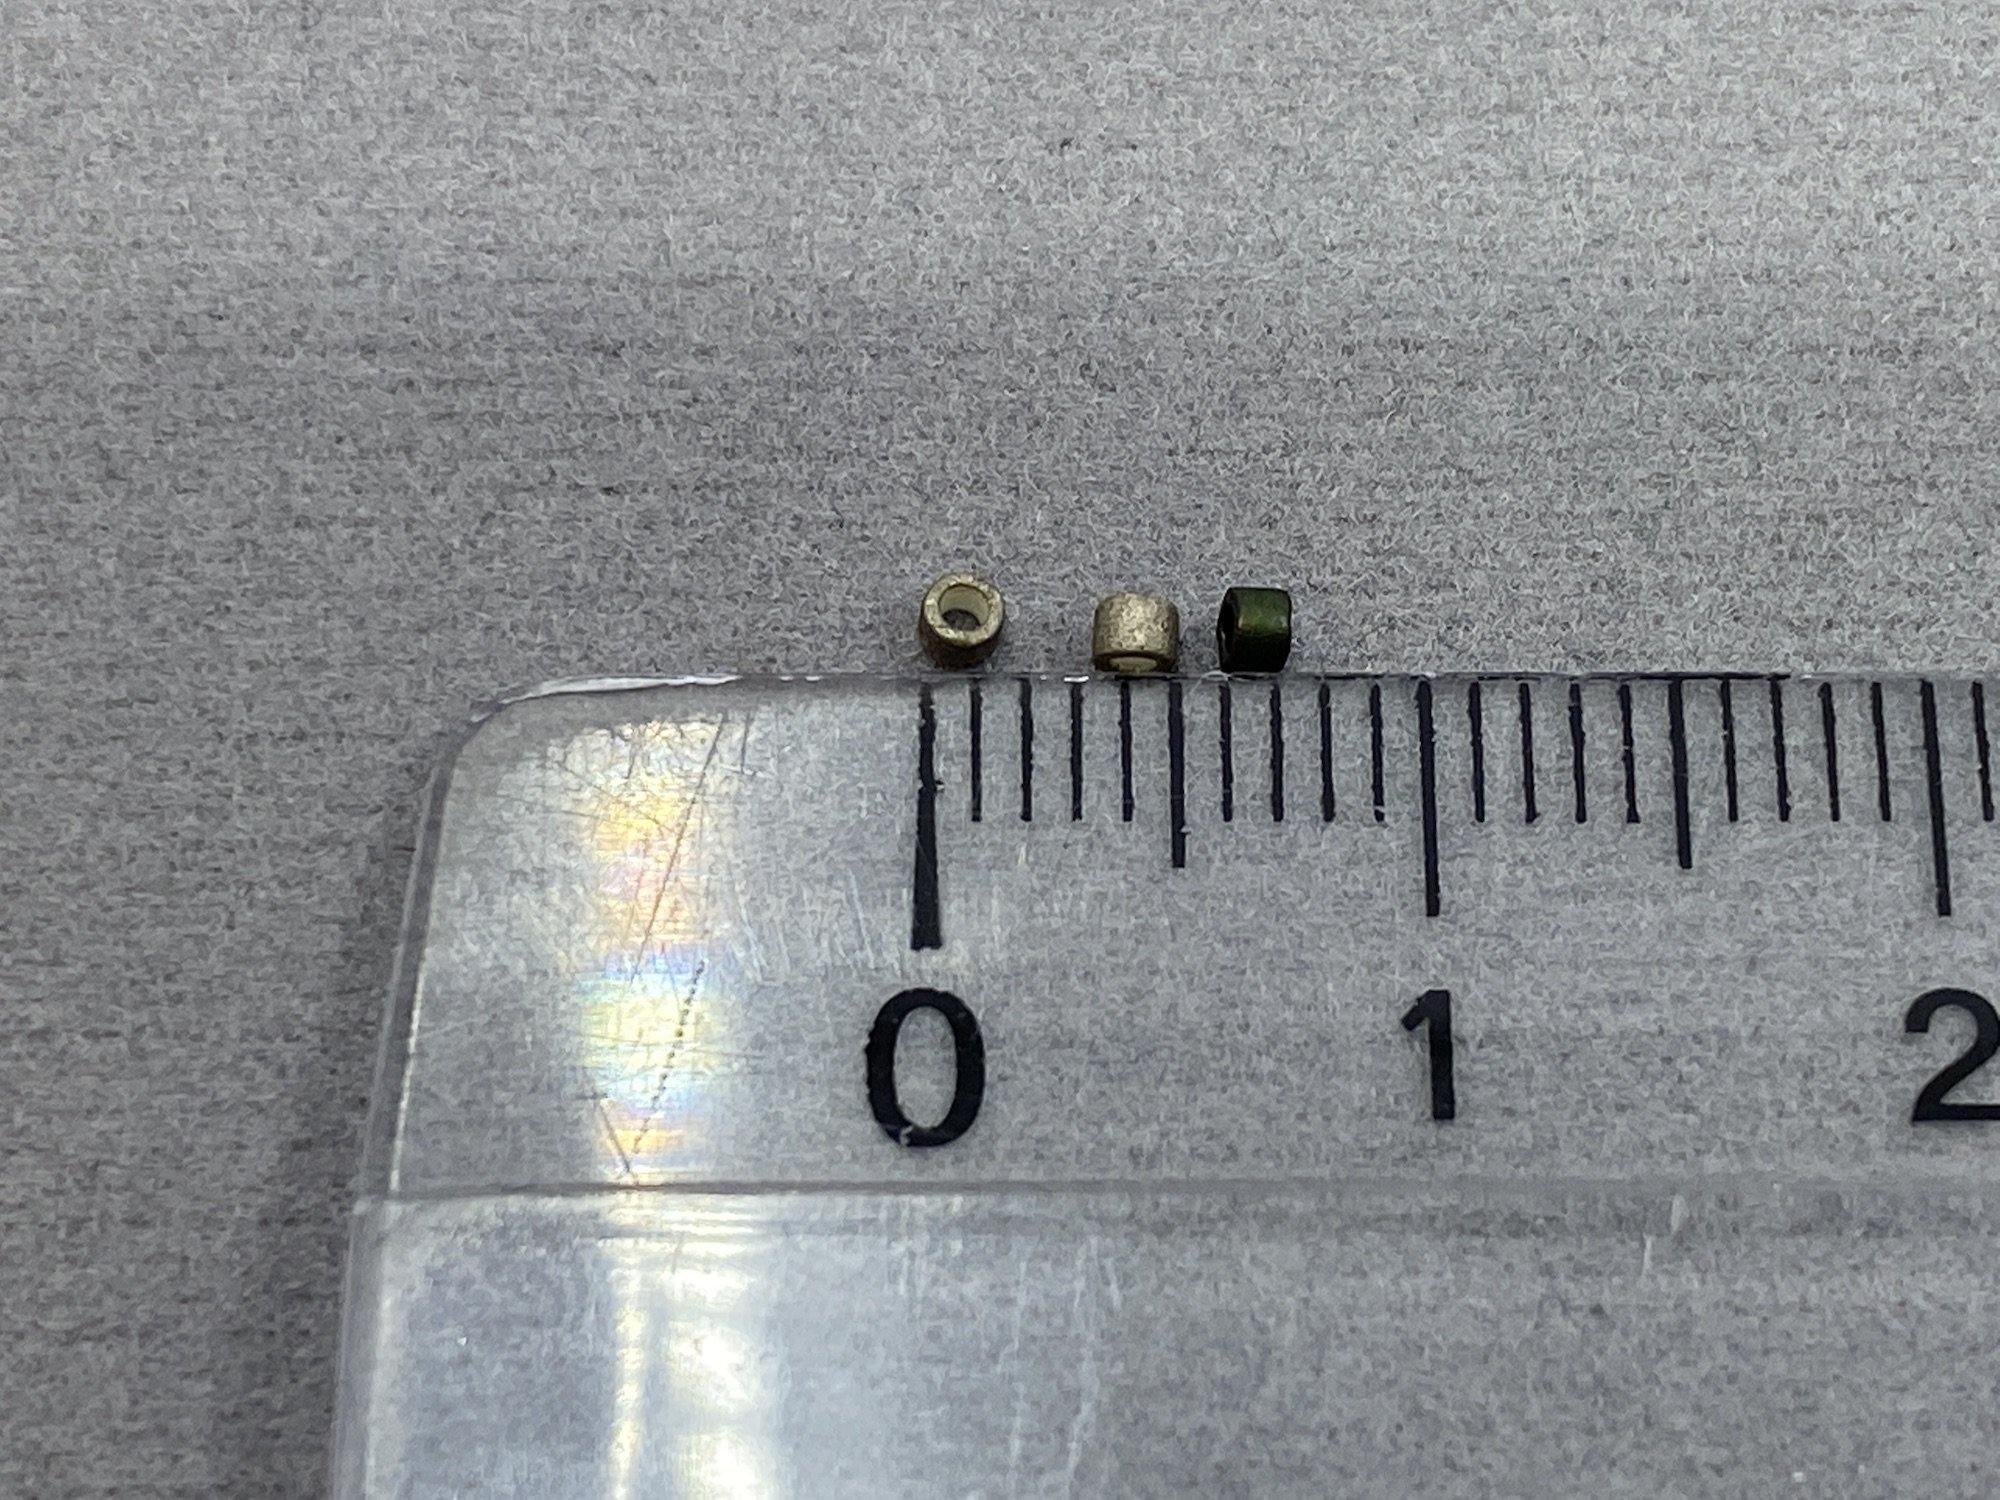 Perles de verre Delica 11/0 - MIX Coquillages Opale